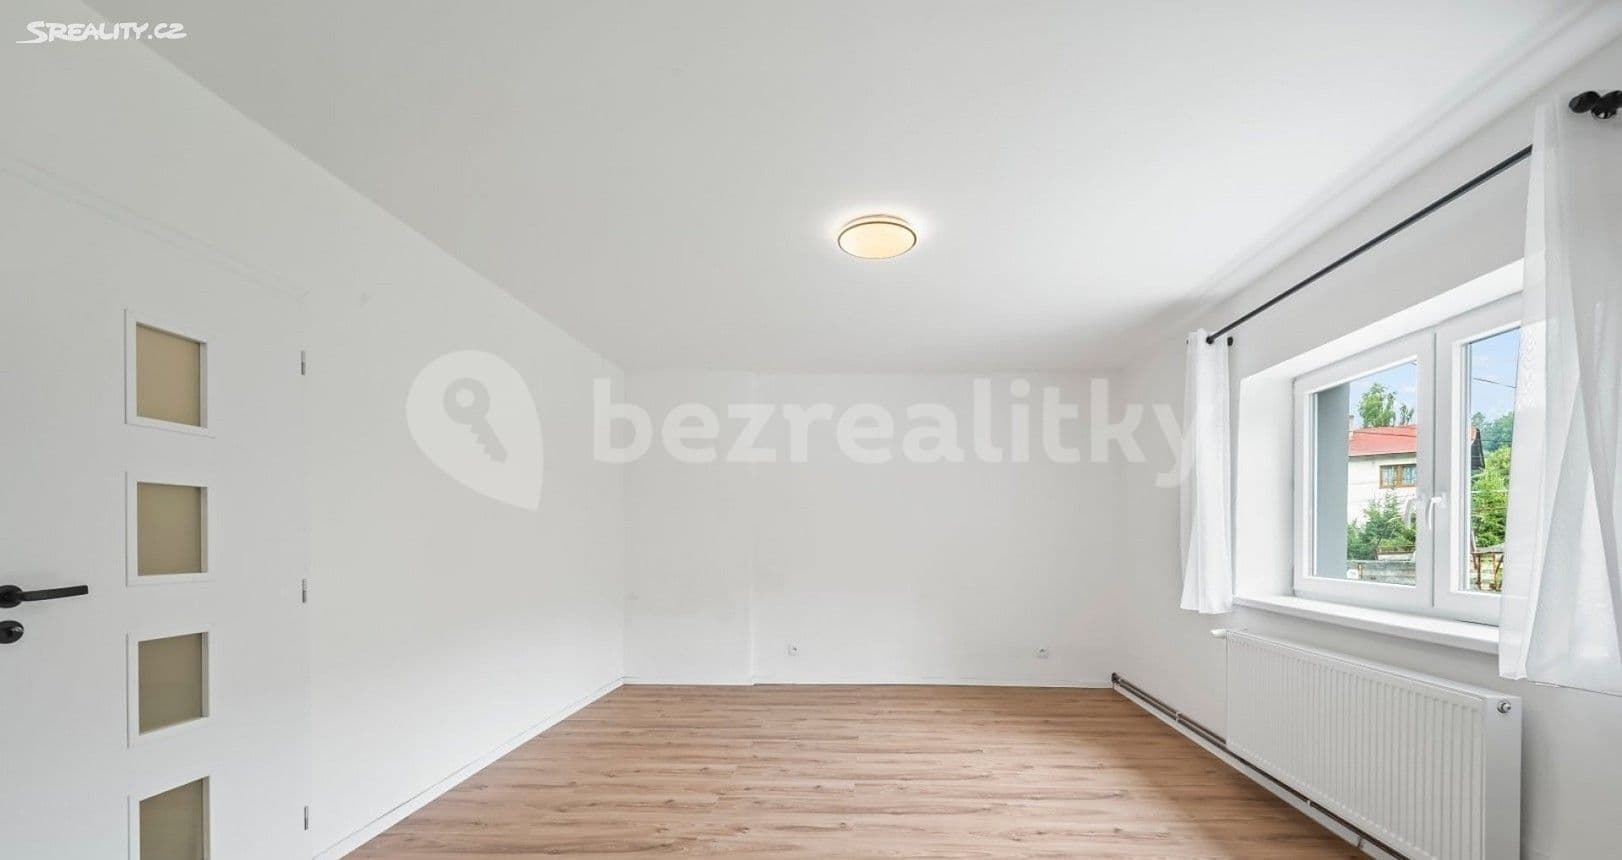 Predaj domu 160 m², pozemek 318 m², Loužnice, Liberecký kraj